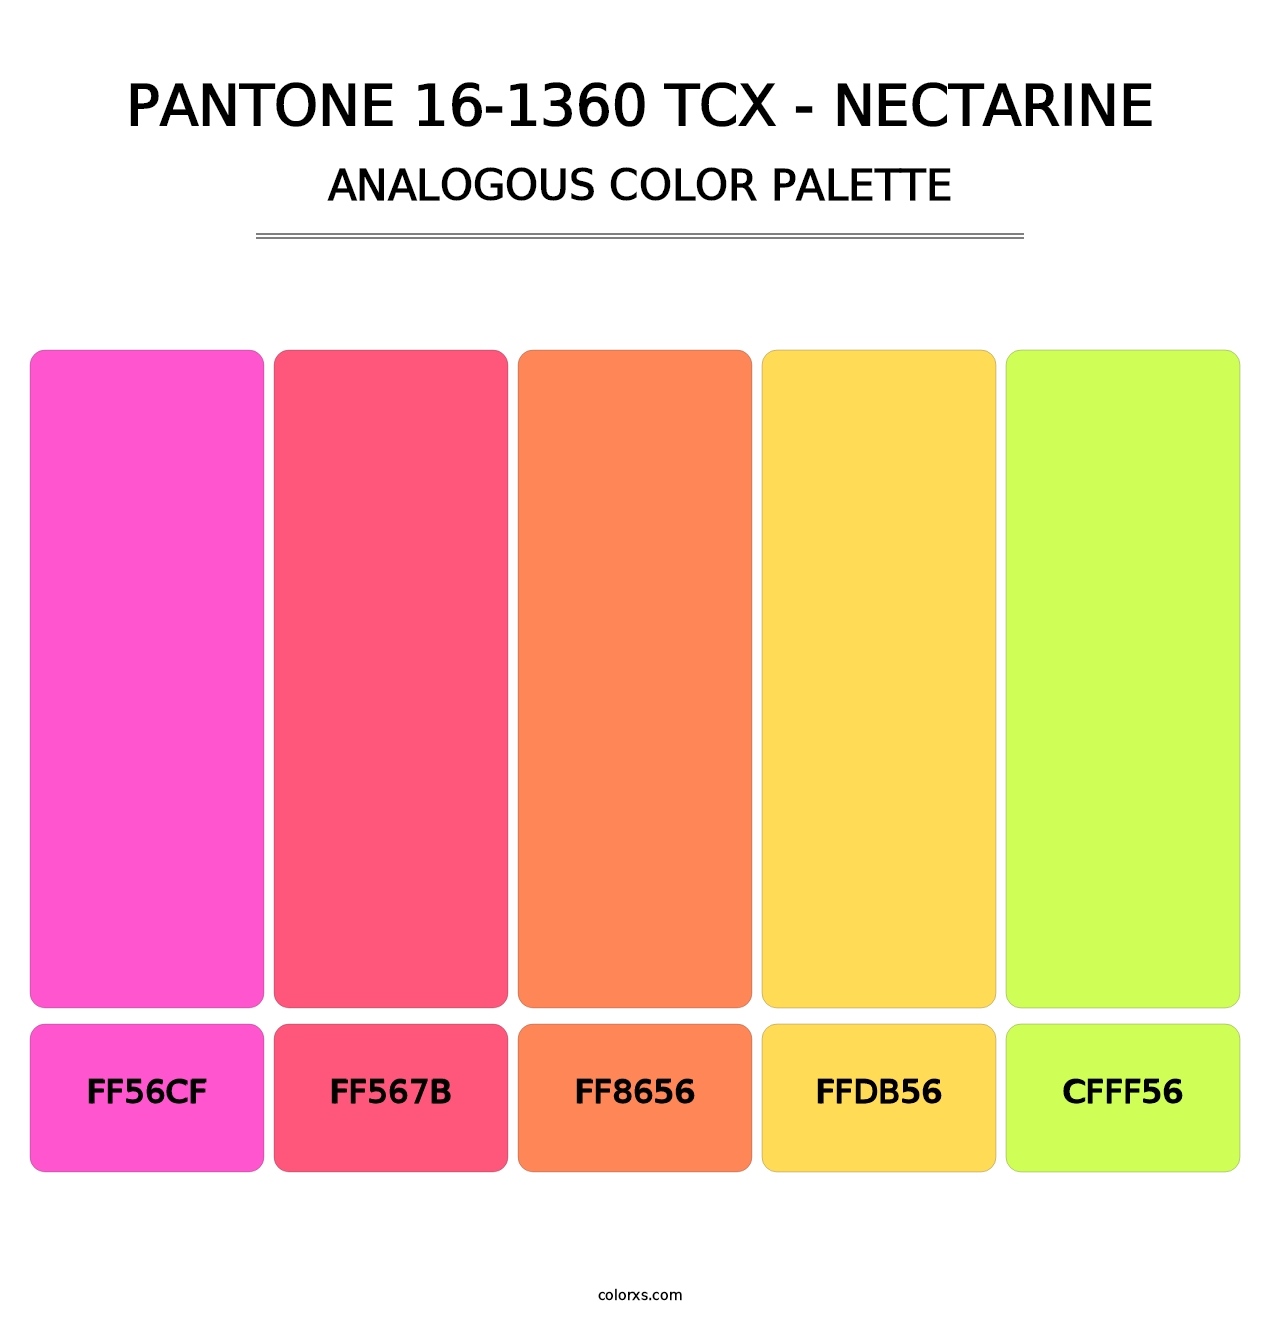 PANTONE 16-1360 TCX - Nectarine - Analogous Color Palette